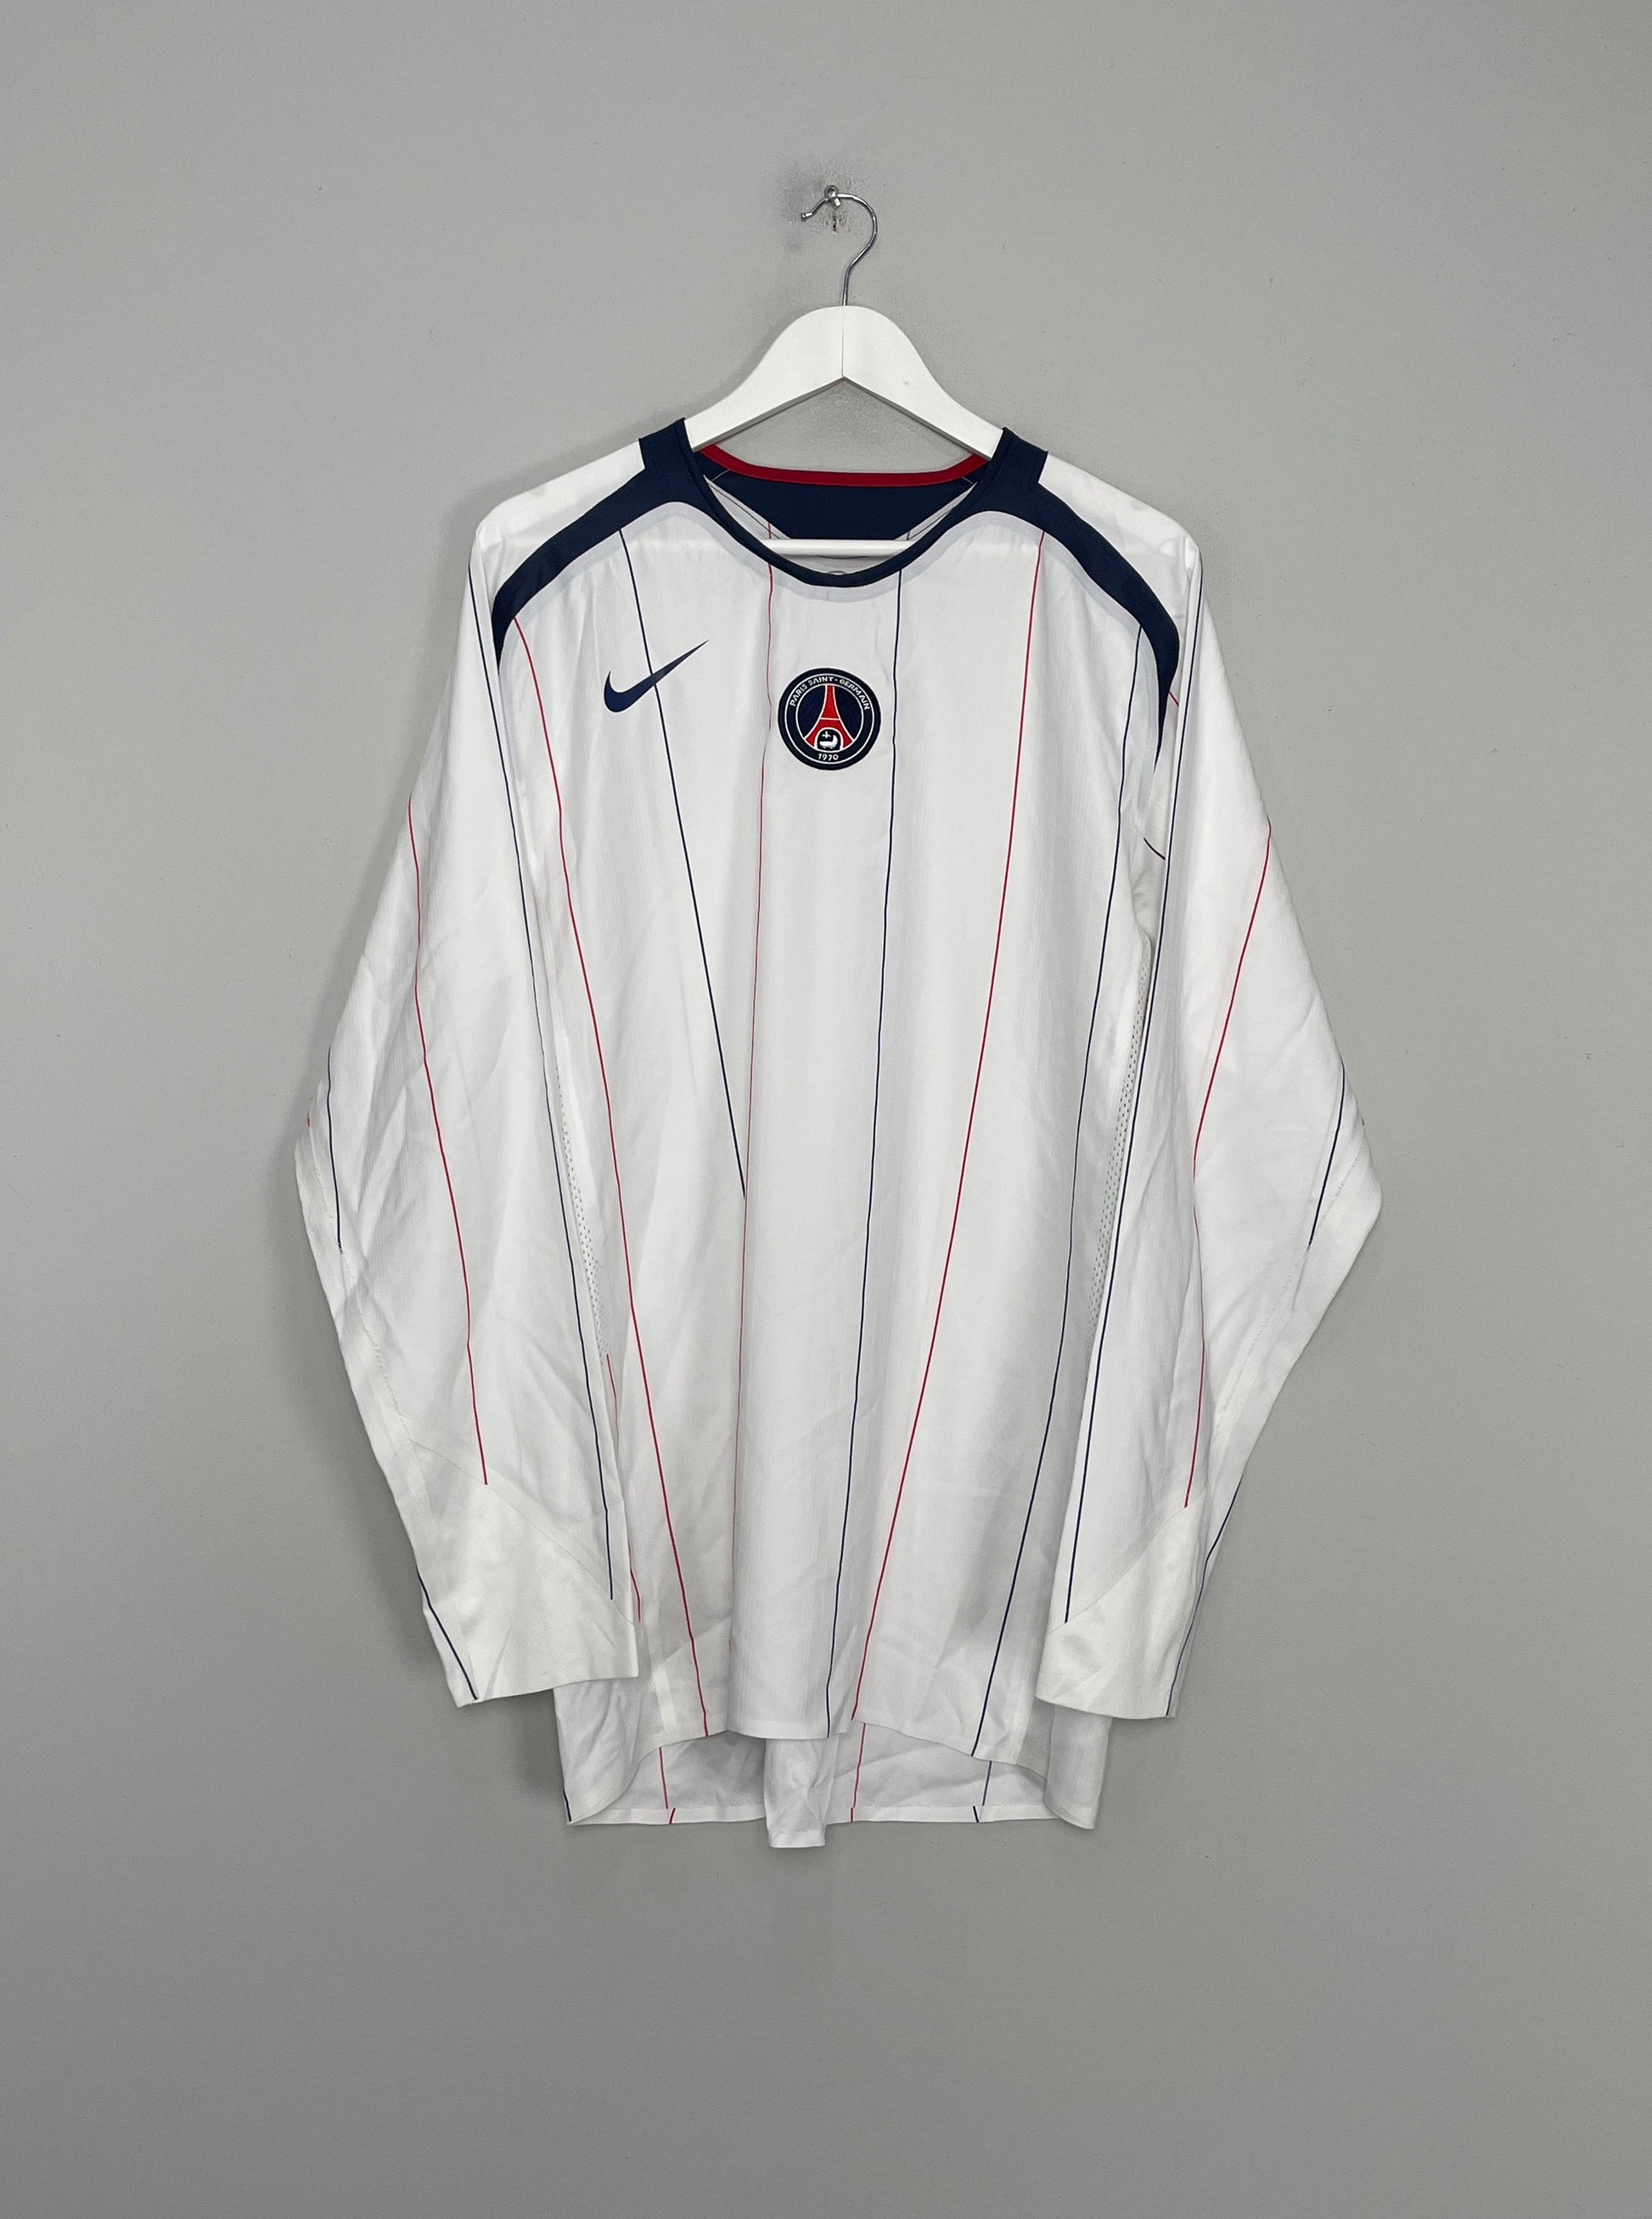 Paris Saint-Germain Home football shirt 2005 - 2006.